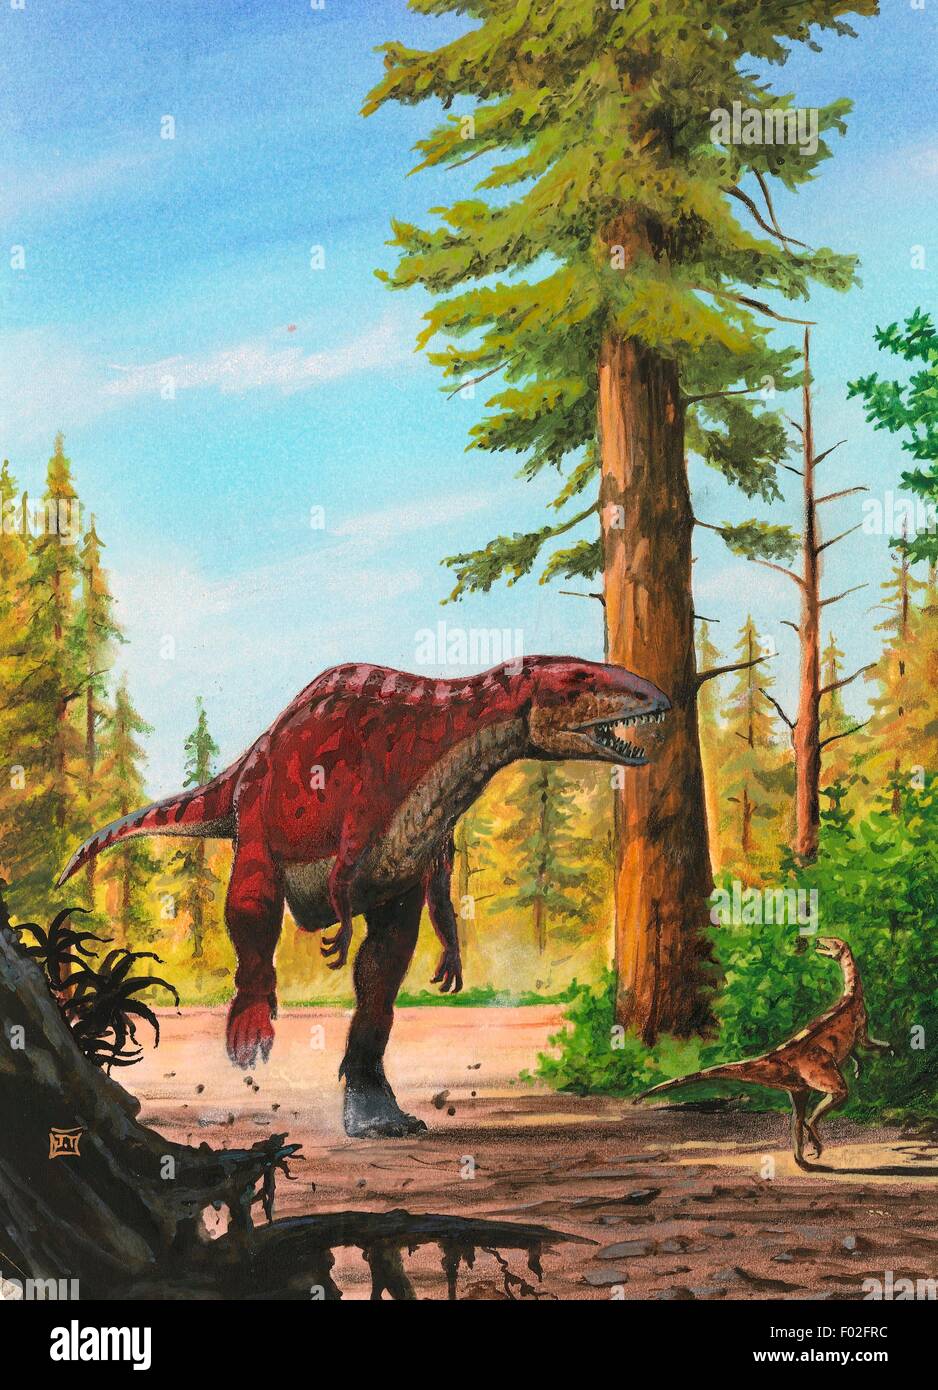 Acrocanthosaurus atokensis, Carcharodontosauridae, Cretacico. Artwork by J Dang. Stock Photo